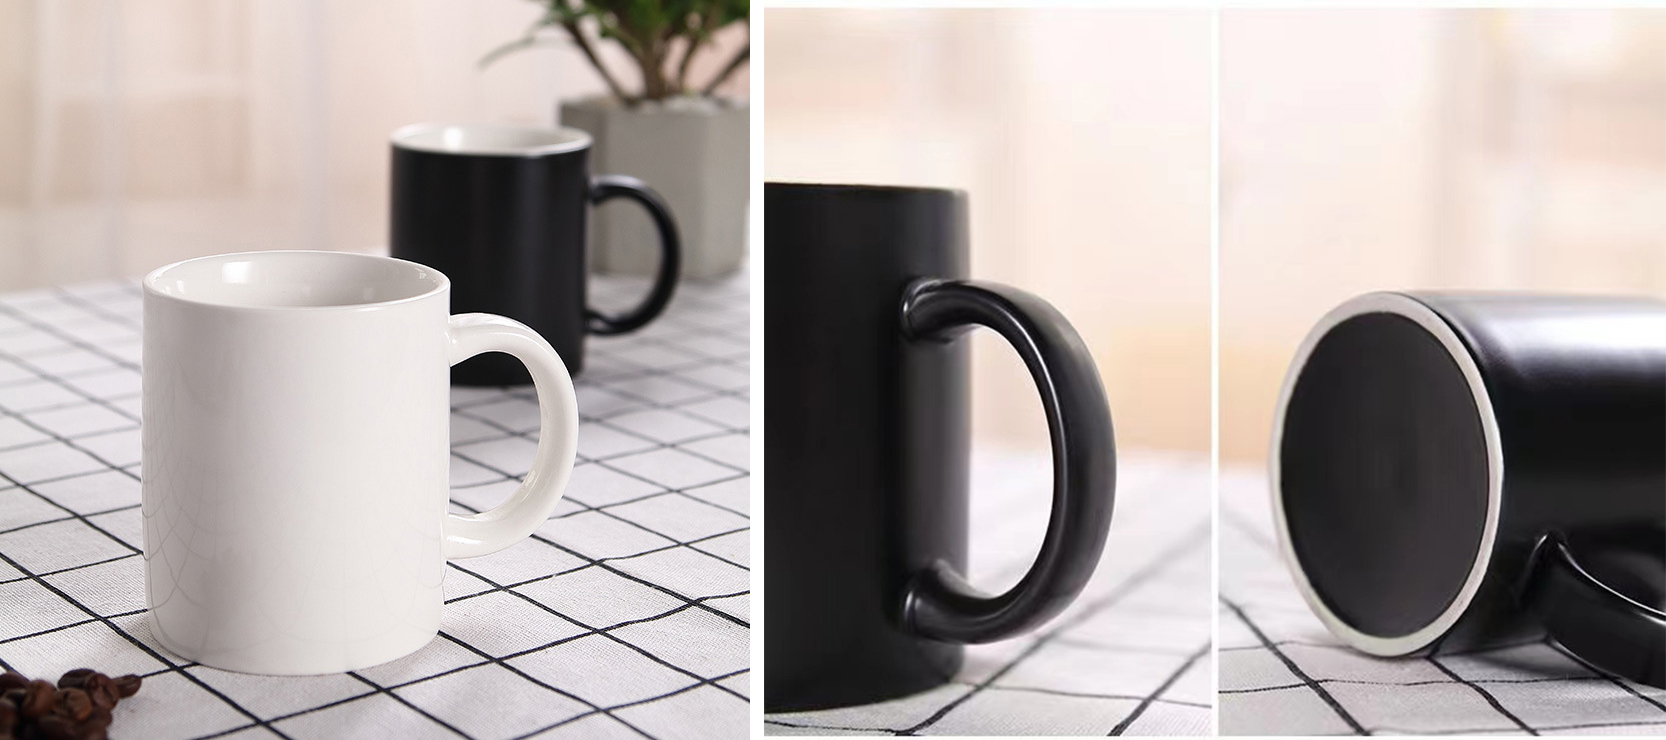 Hot-sale product porcelain mug